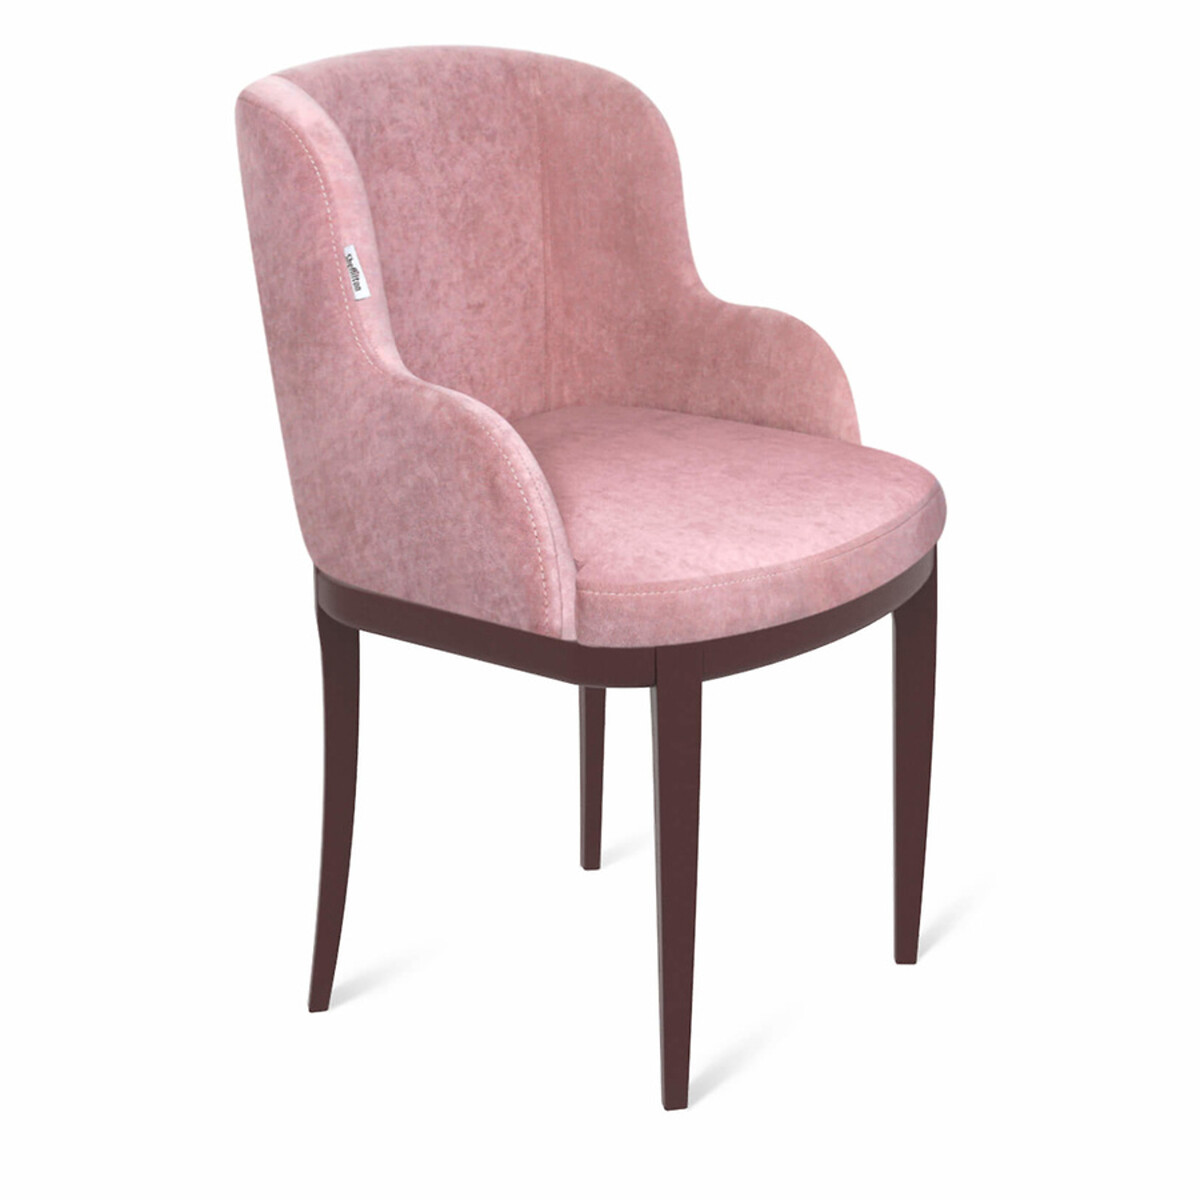 Стул Sheffilton SHT-ST39S132 единый размер розовый стул eirill единый размер розовый